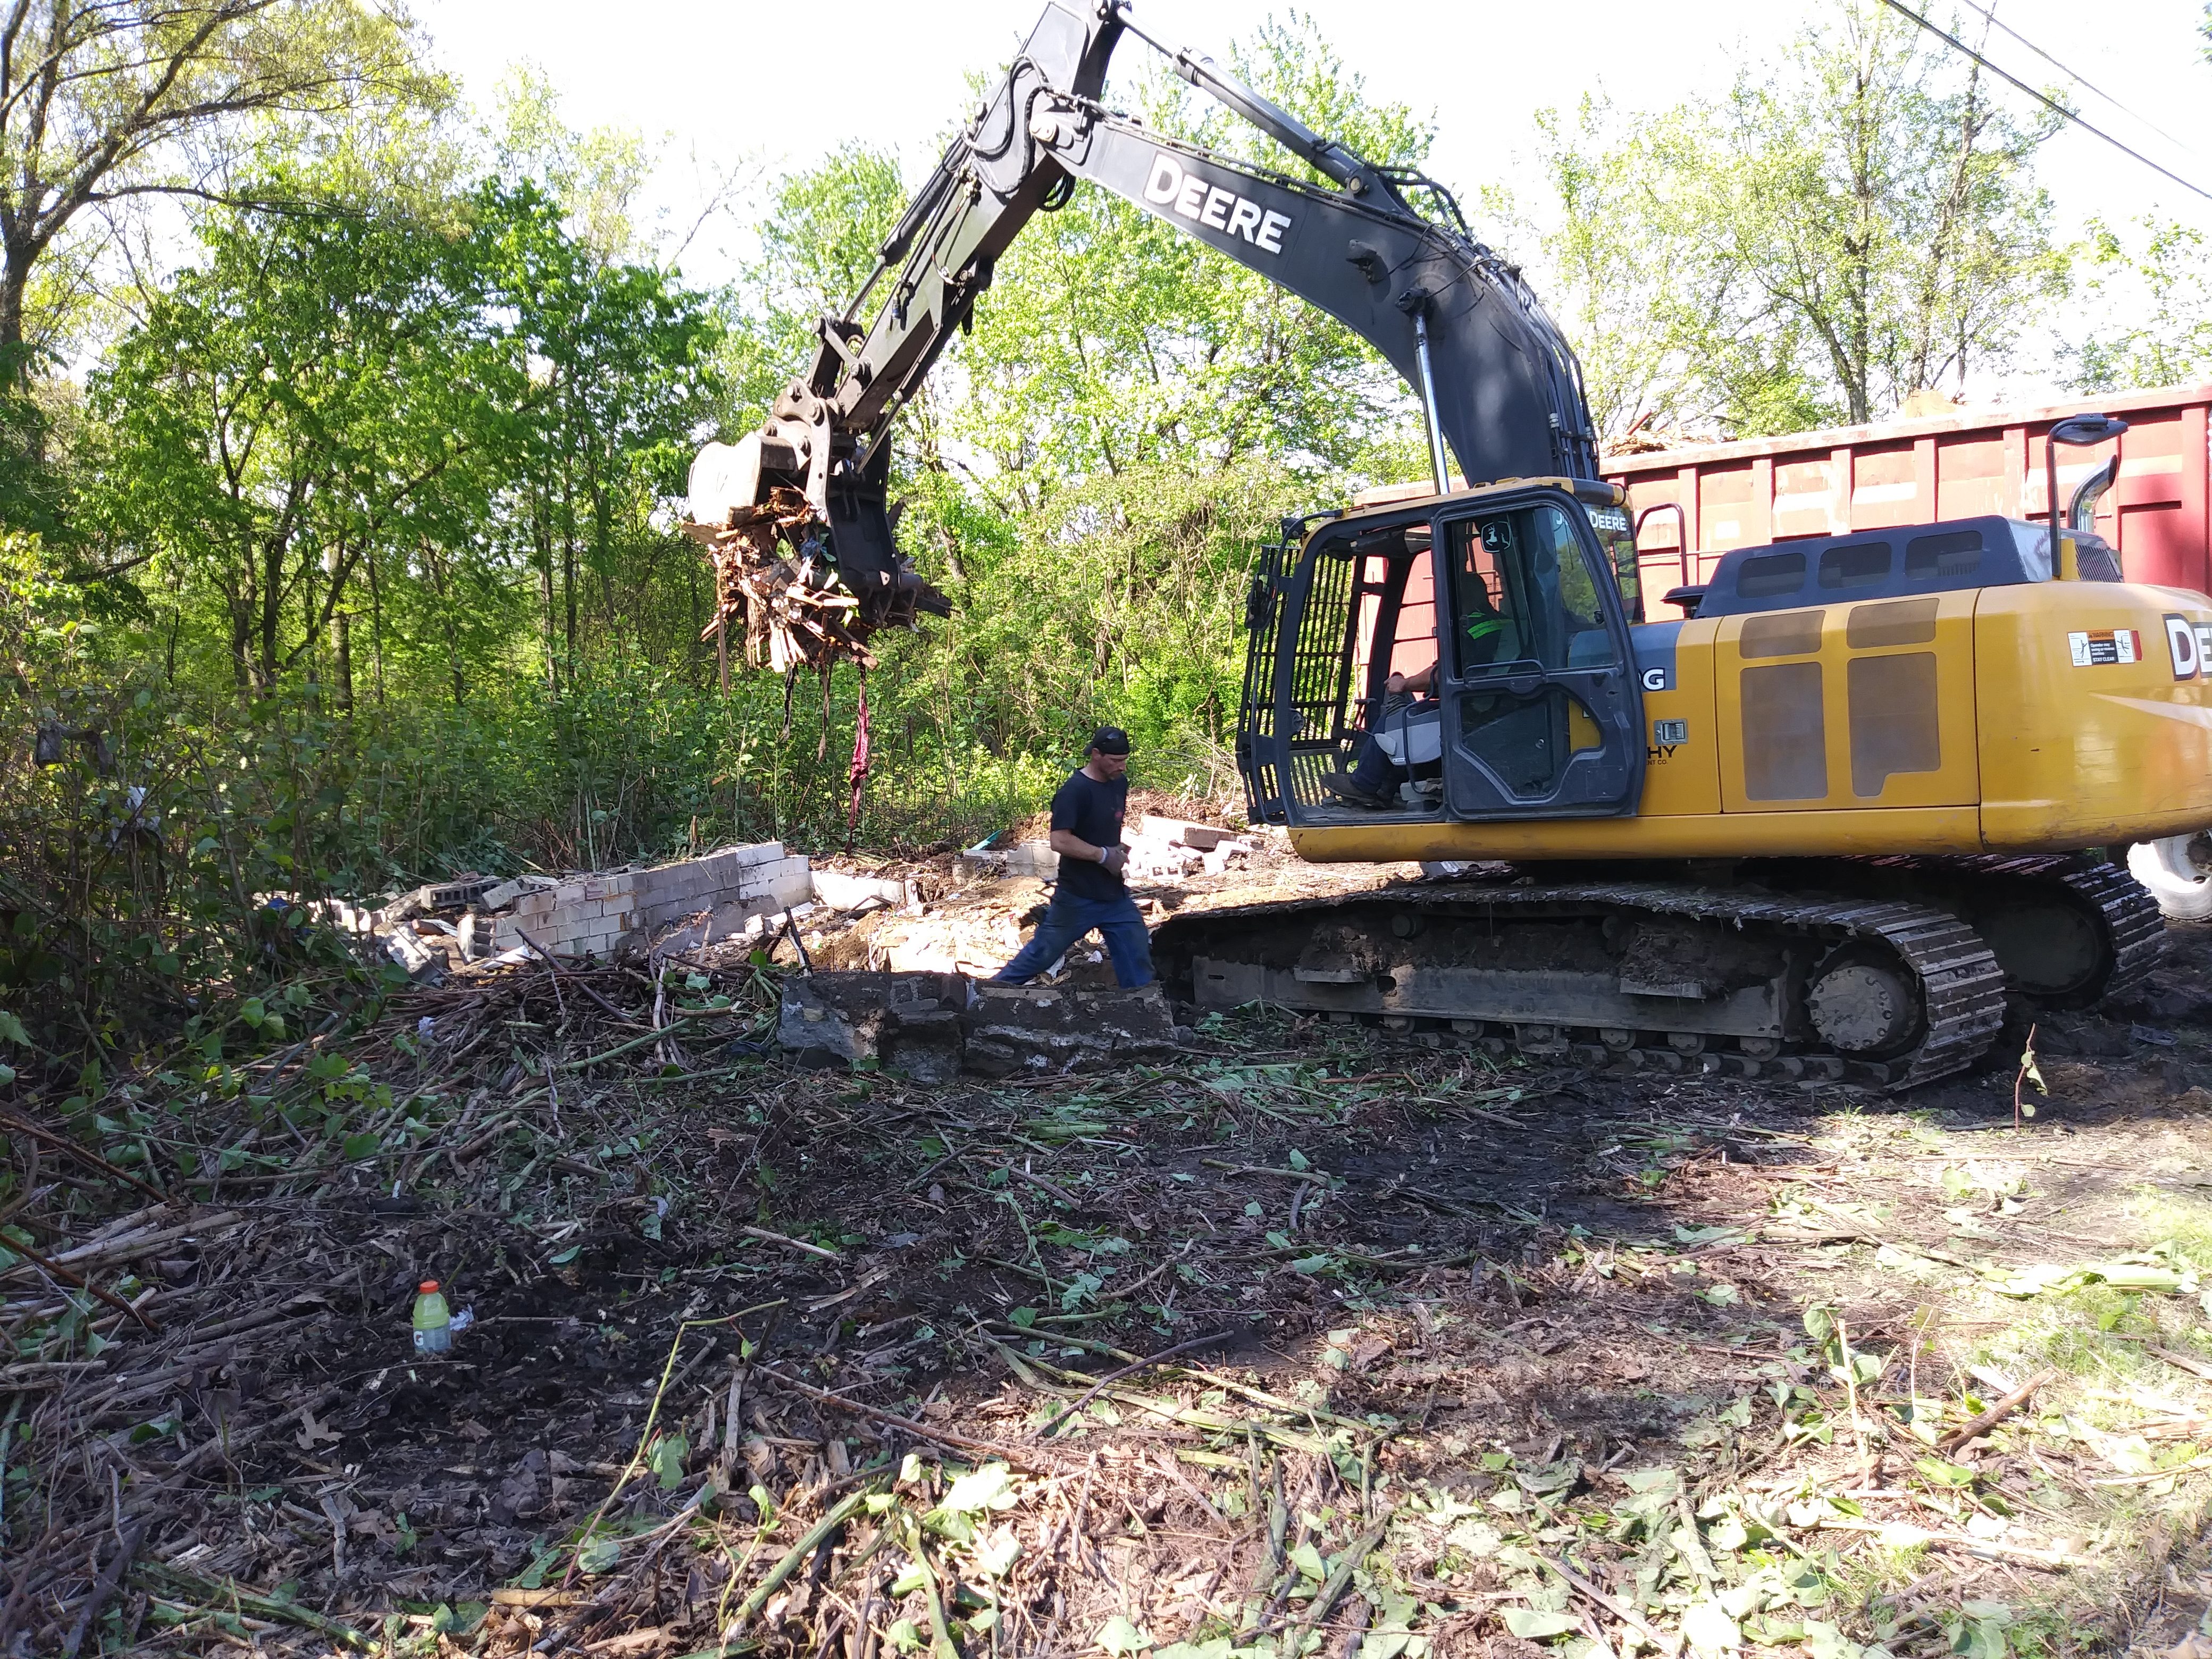 Ryan Sereday is at wheel of excavator; Sereday laborer Chad Richmond helps out on the ground.